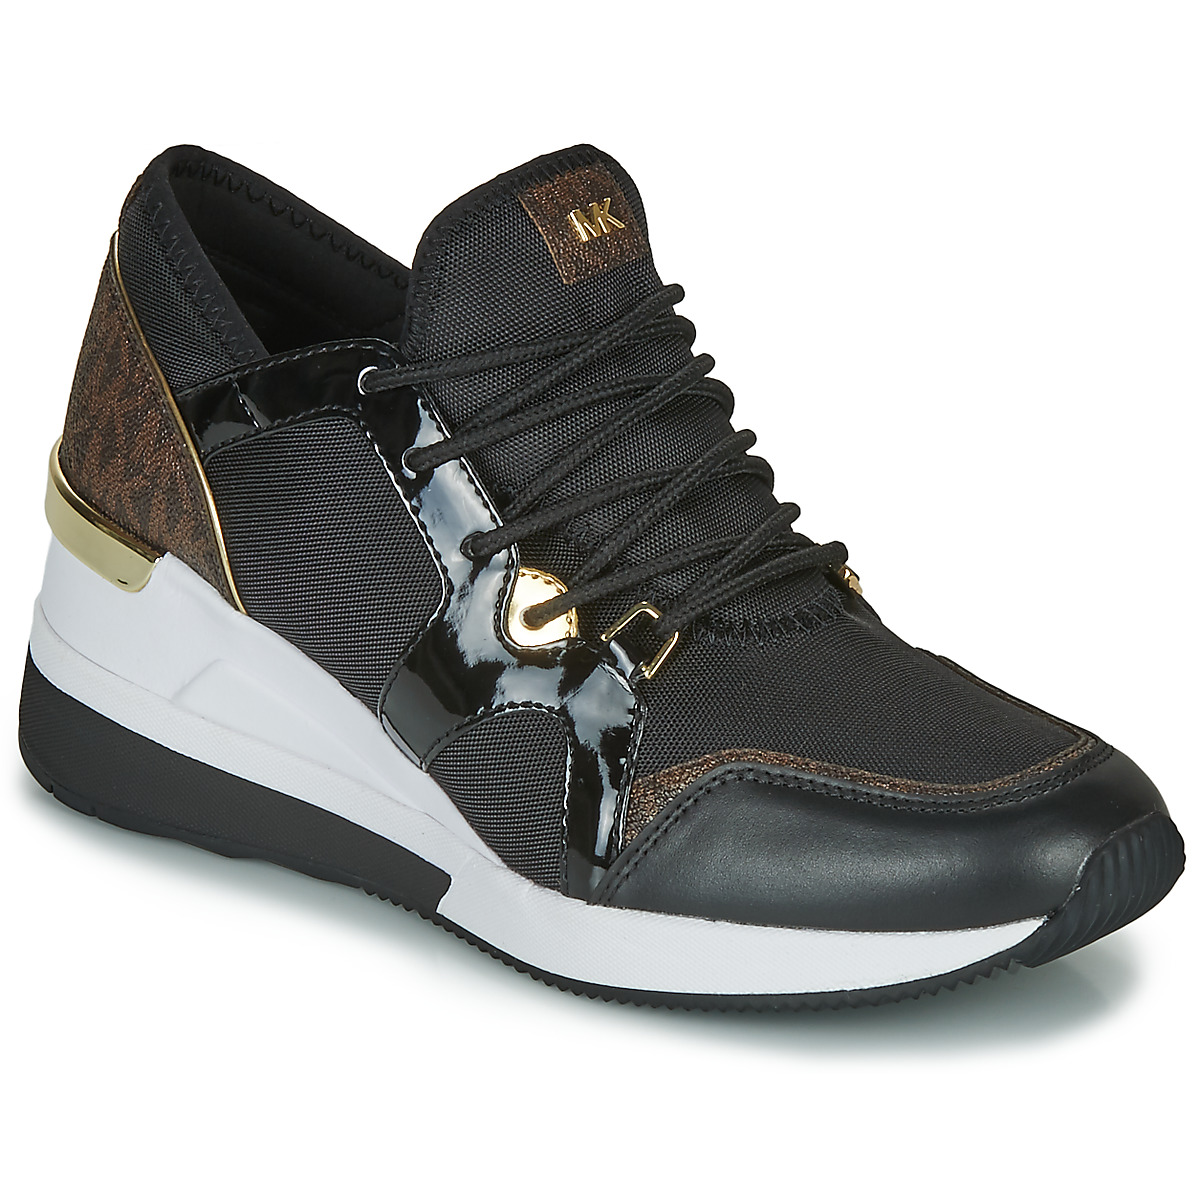 Michael Kors Bodie Slip On - Slip-on sneakers - Boozt.com